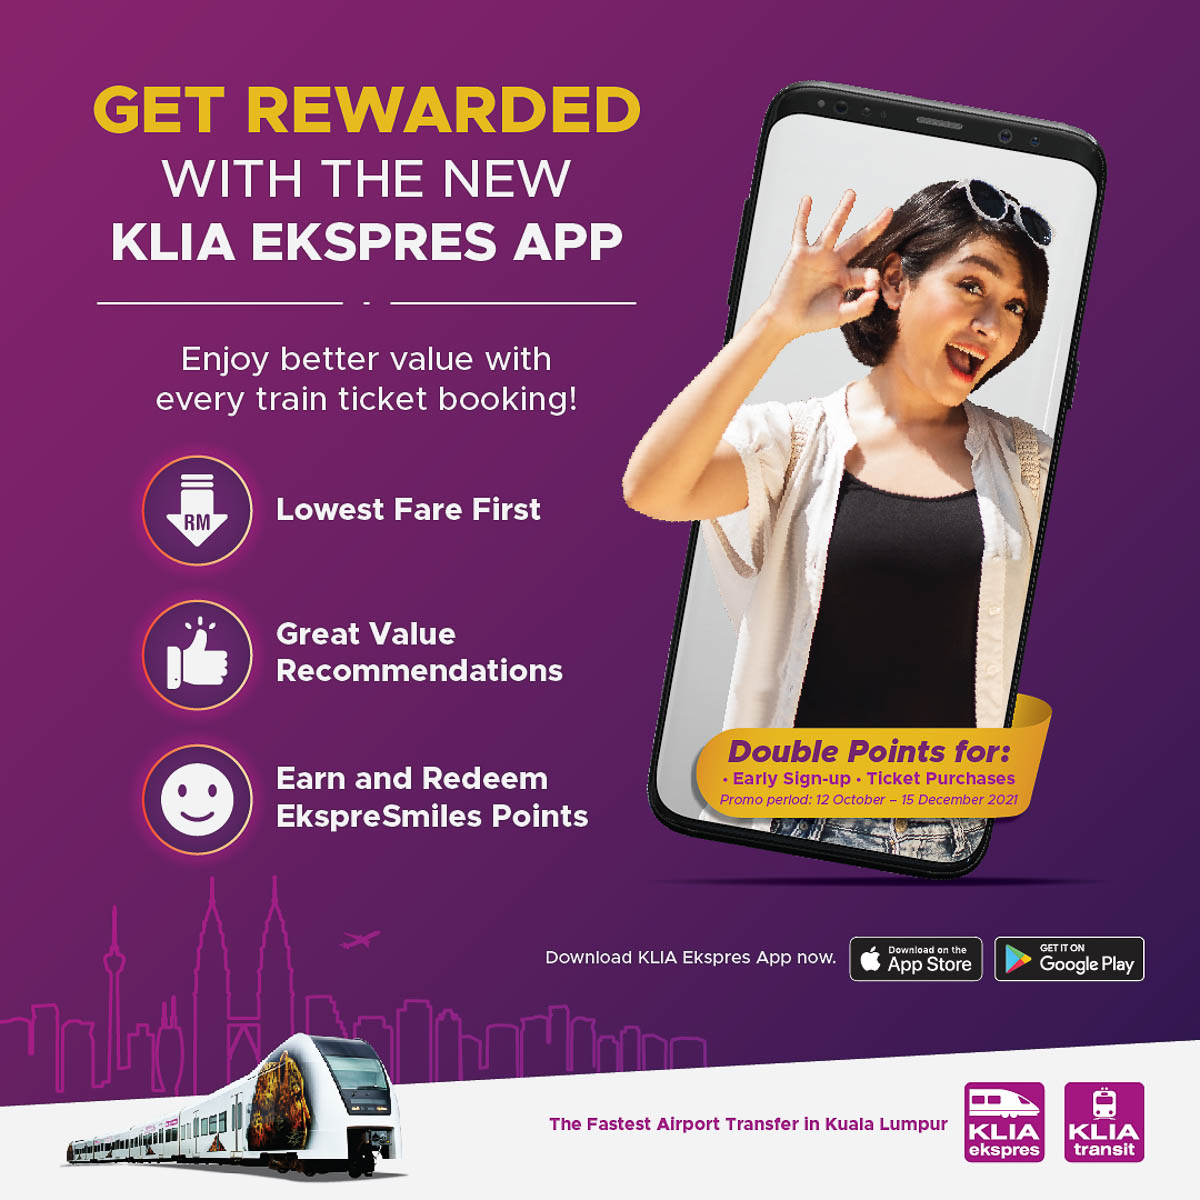 KLIA Ekspres App